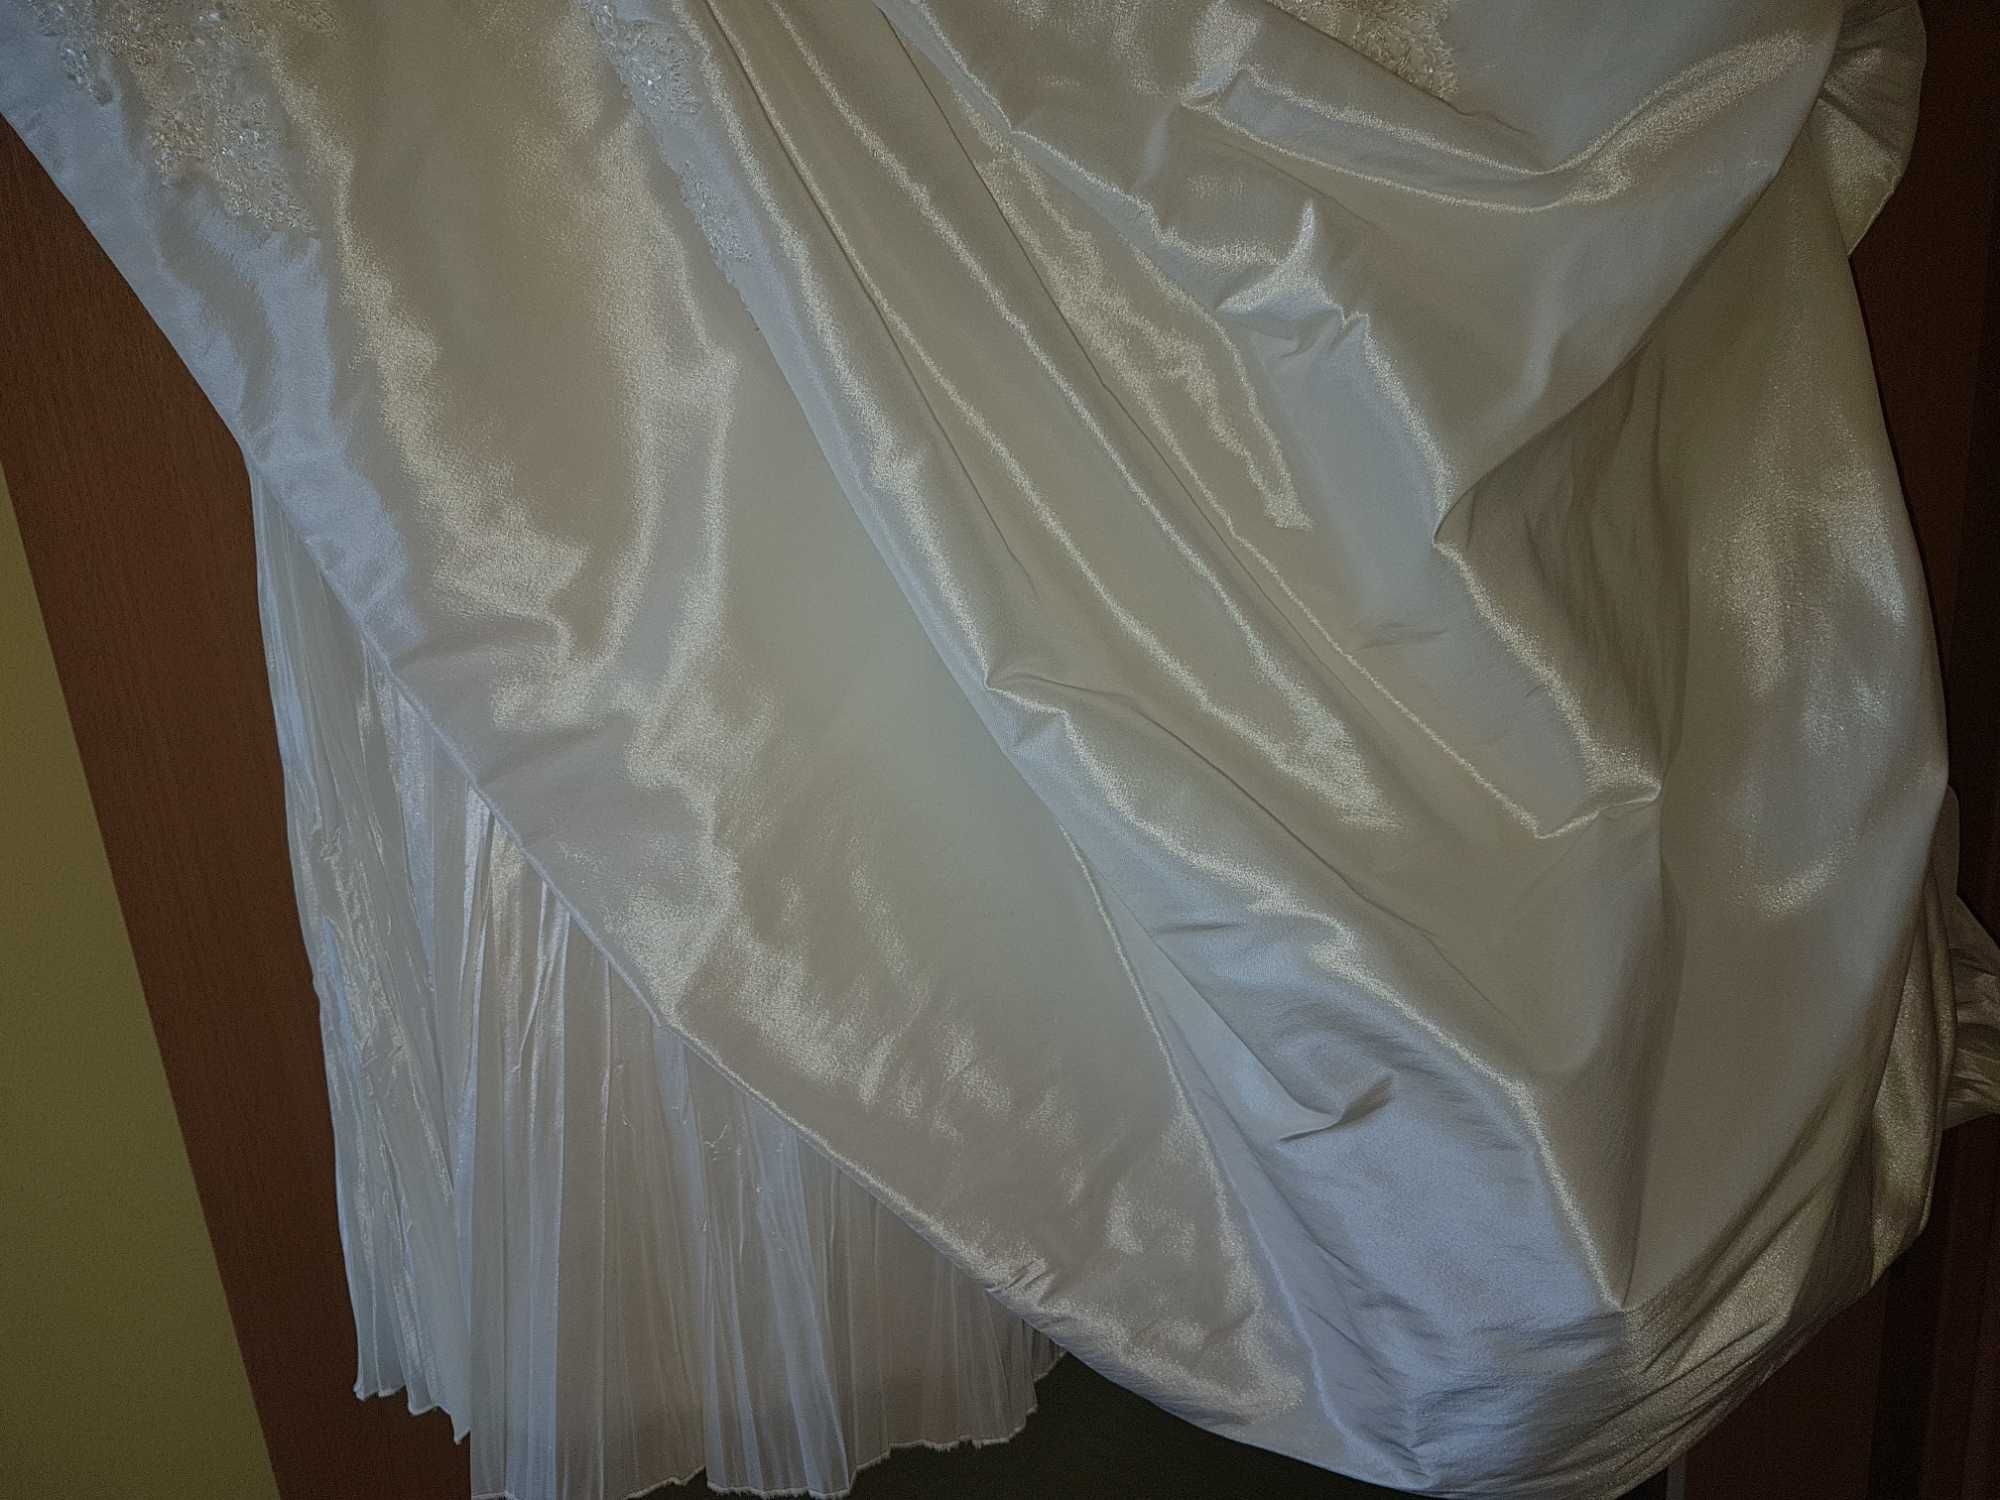 Suknia ślubna rozmiar 42-44